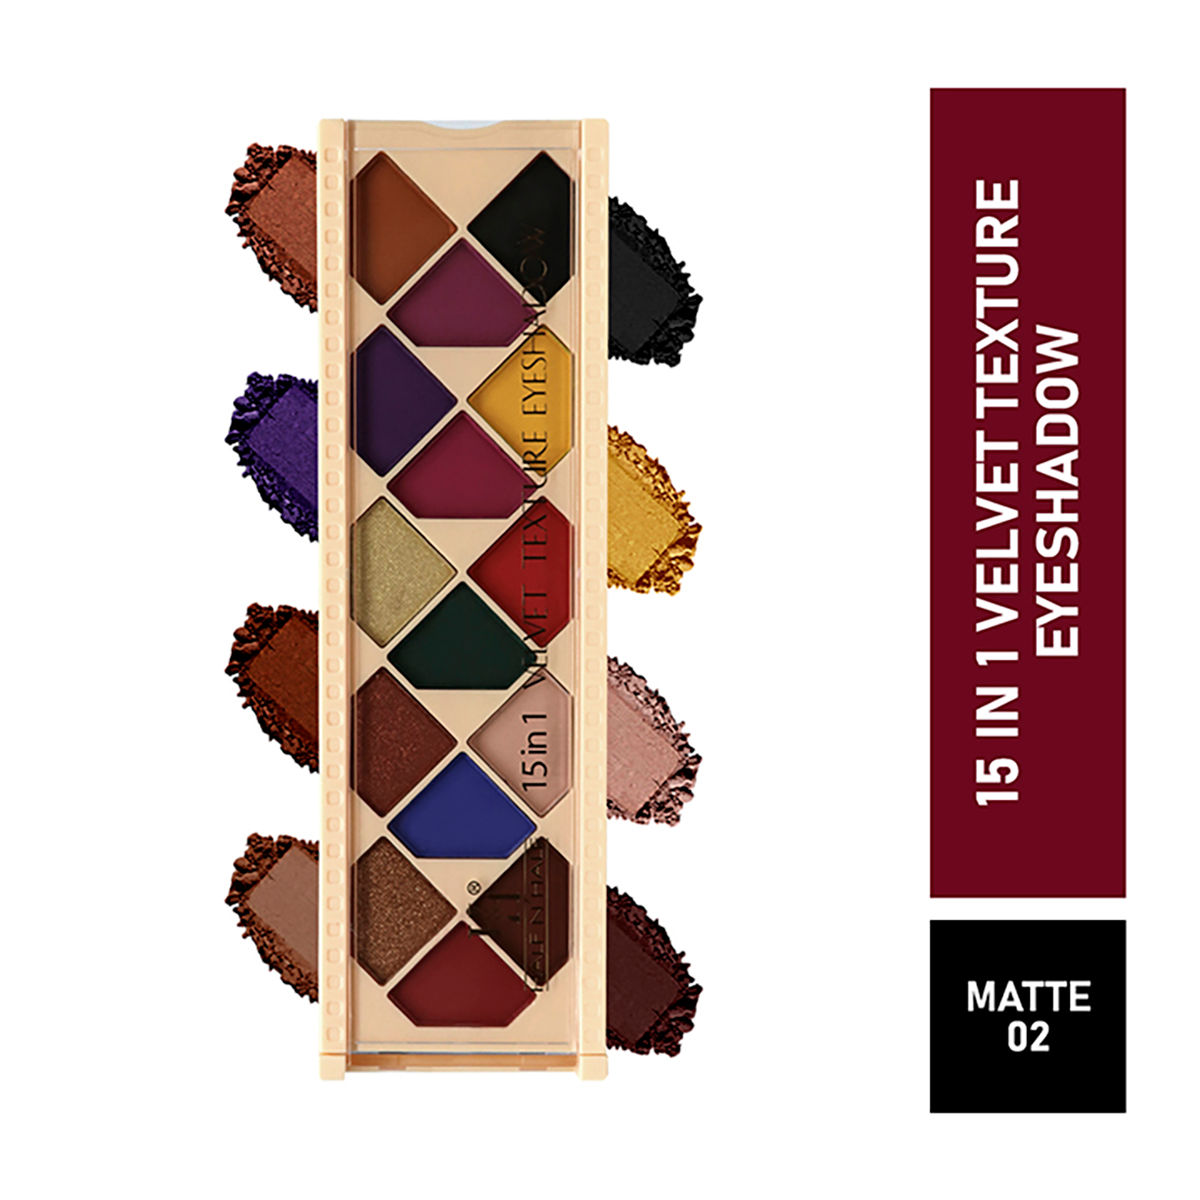 Buy Half N Half 15 in 1 Velvet Texture Eyeshadow Matte Palette, Flawless Shades, Easy to Blend, , Waterproof Durable Highly Pigmented Eye Makeup Set Gift for Women, Multicolour - 02 (12gm) - Purplle